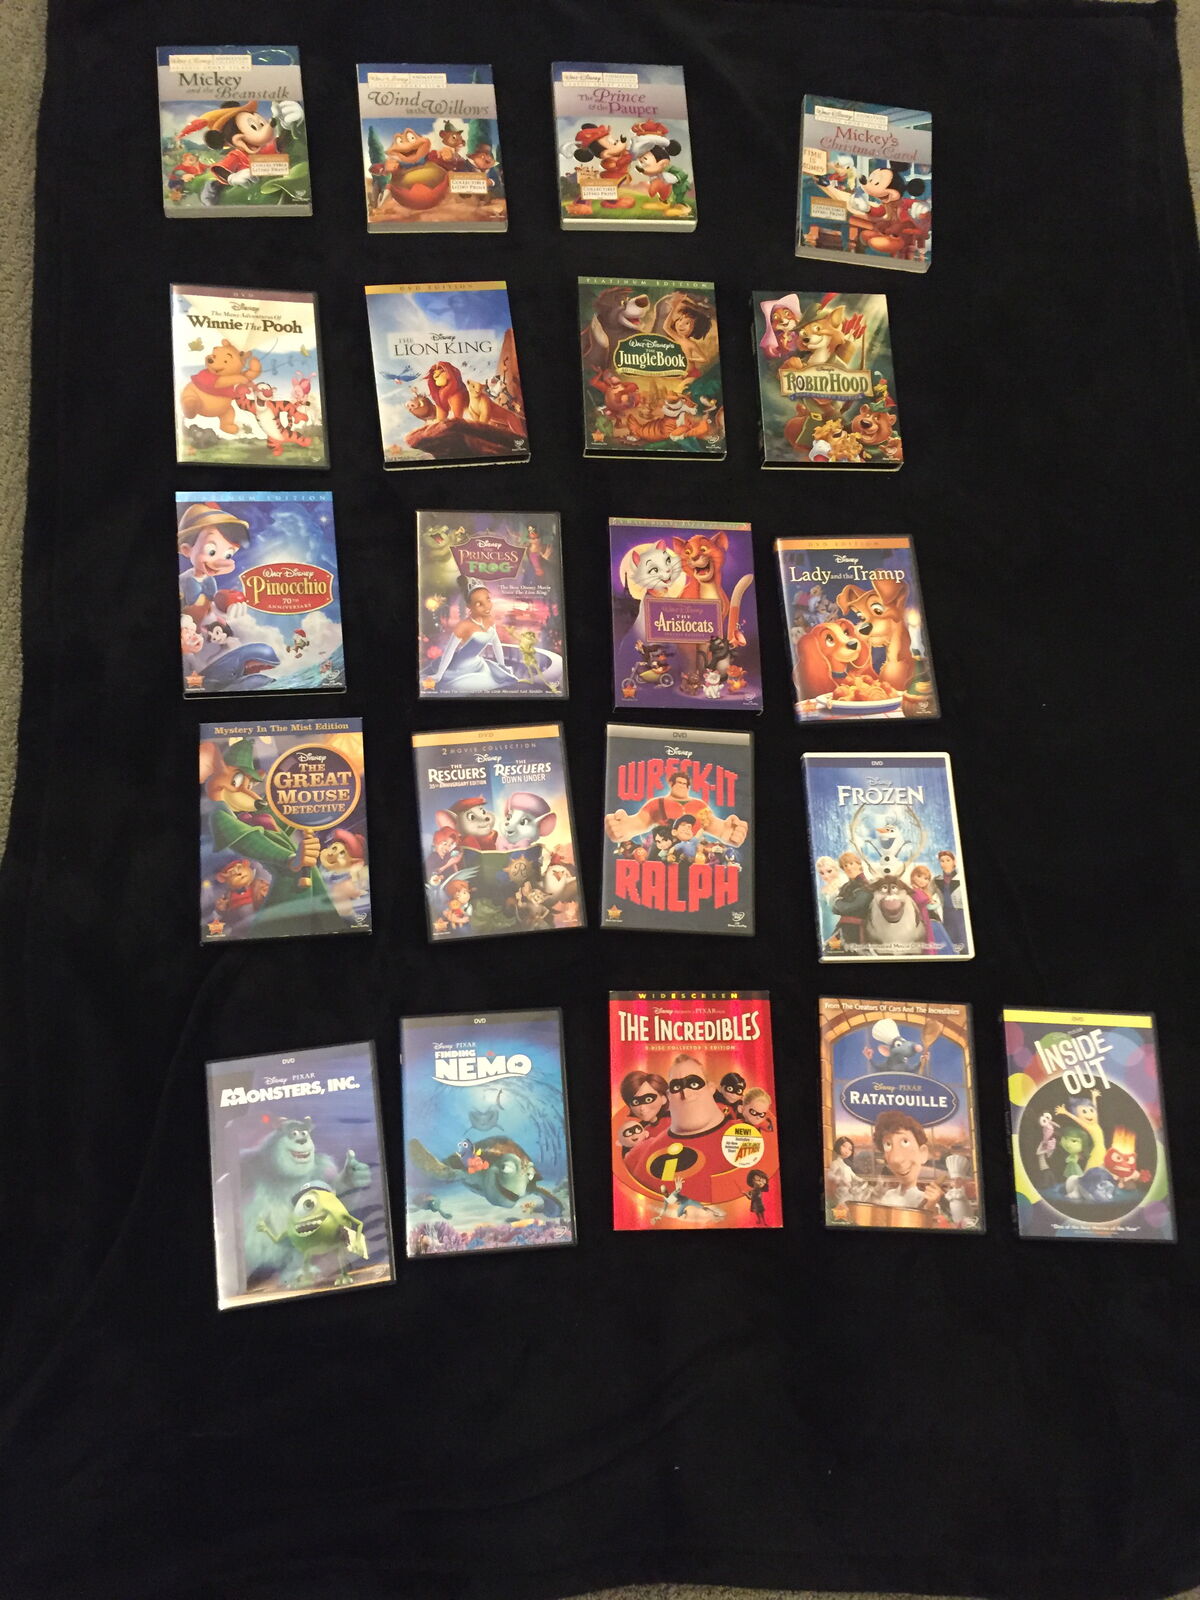 User blog:Ratigan6688/My Disney DVD Collection, Disney Wiki